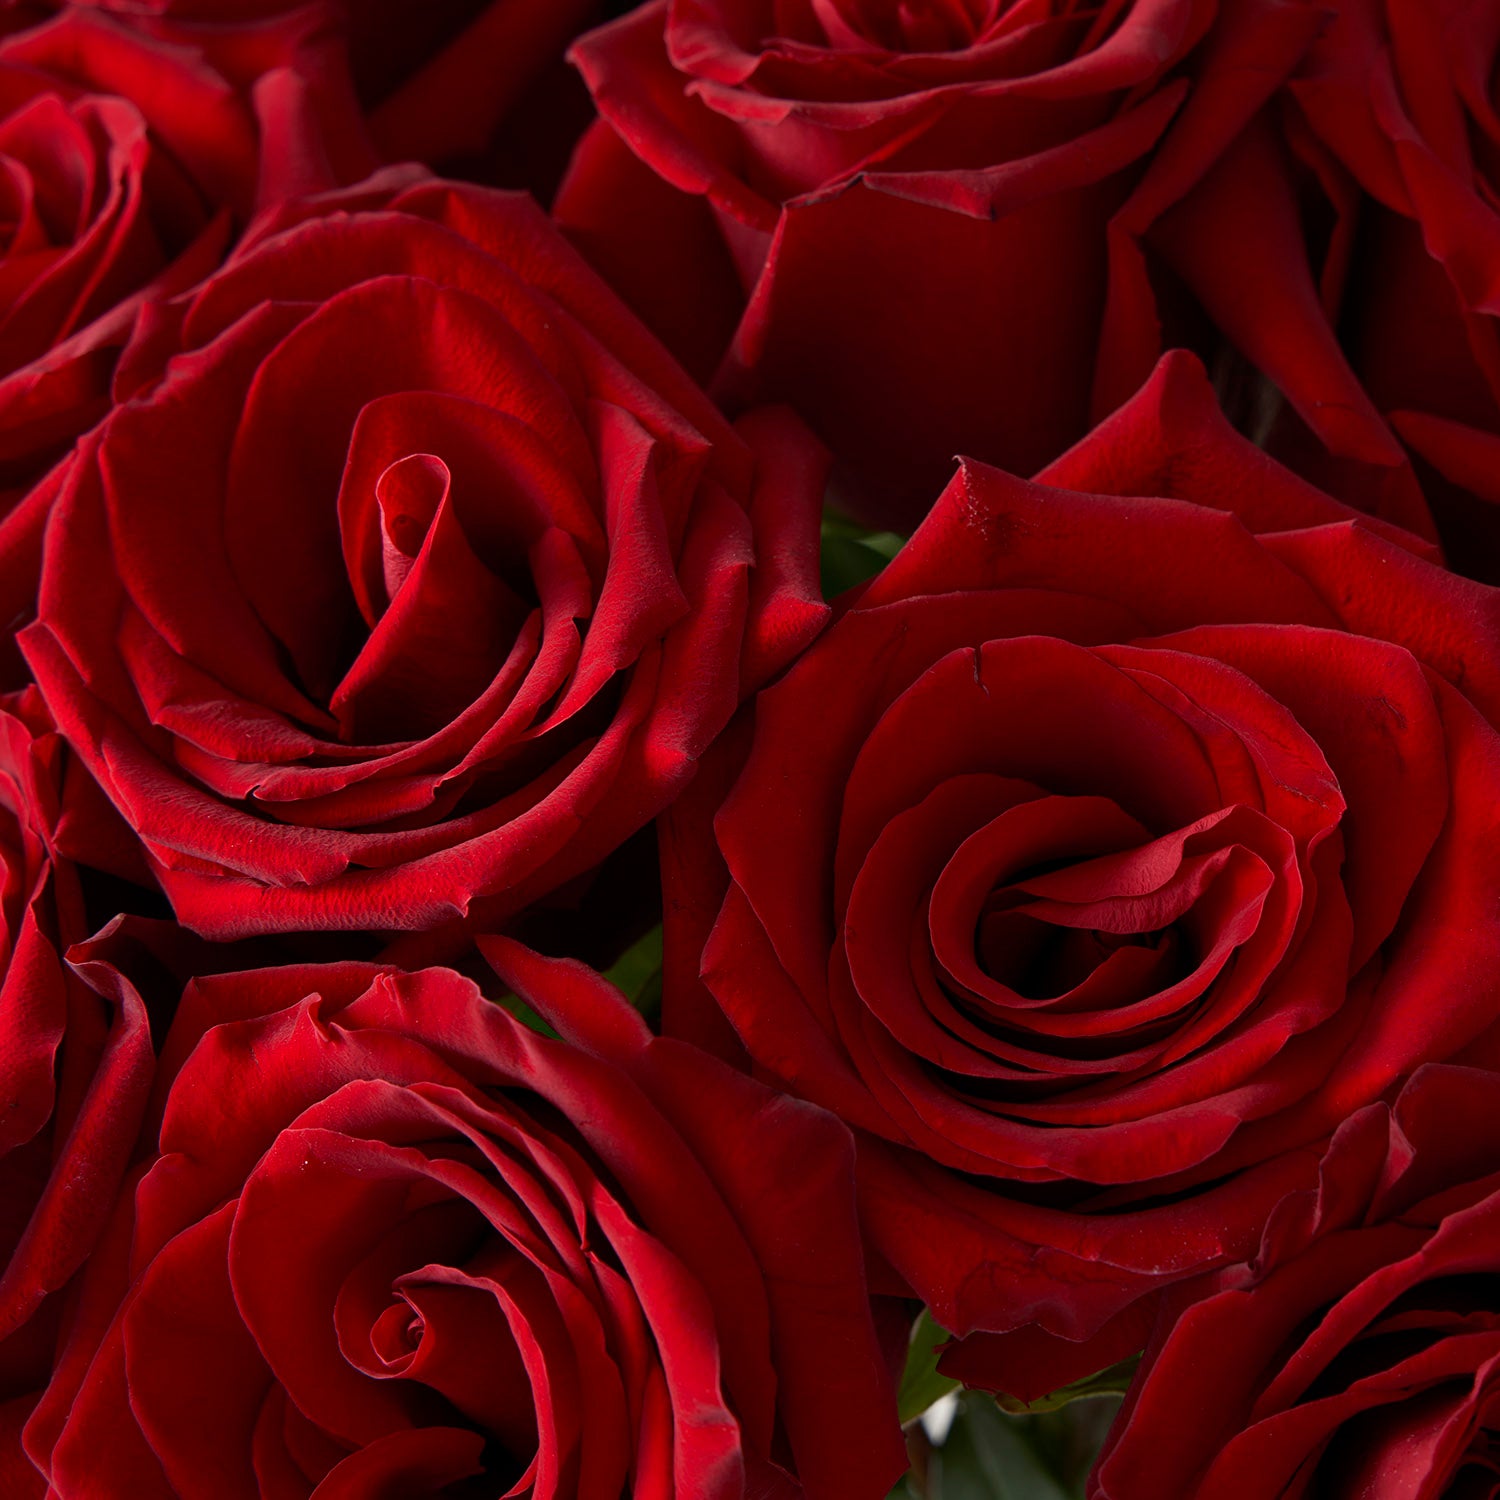 Closeup of red roses.